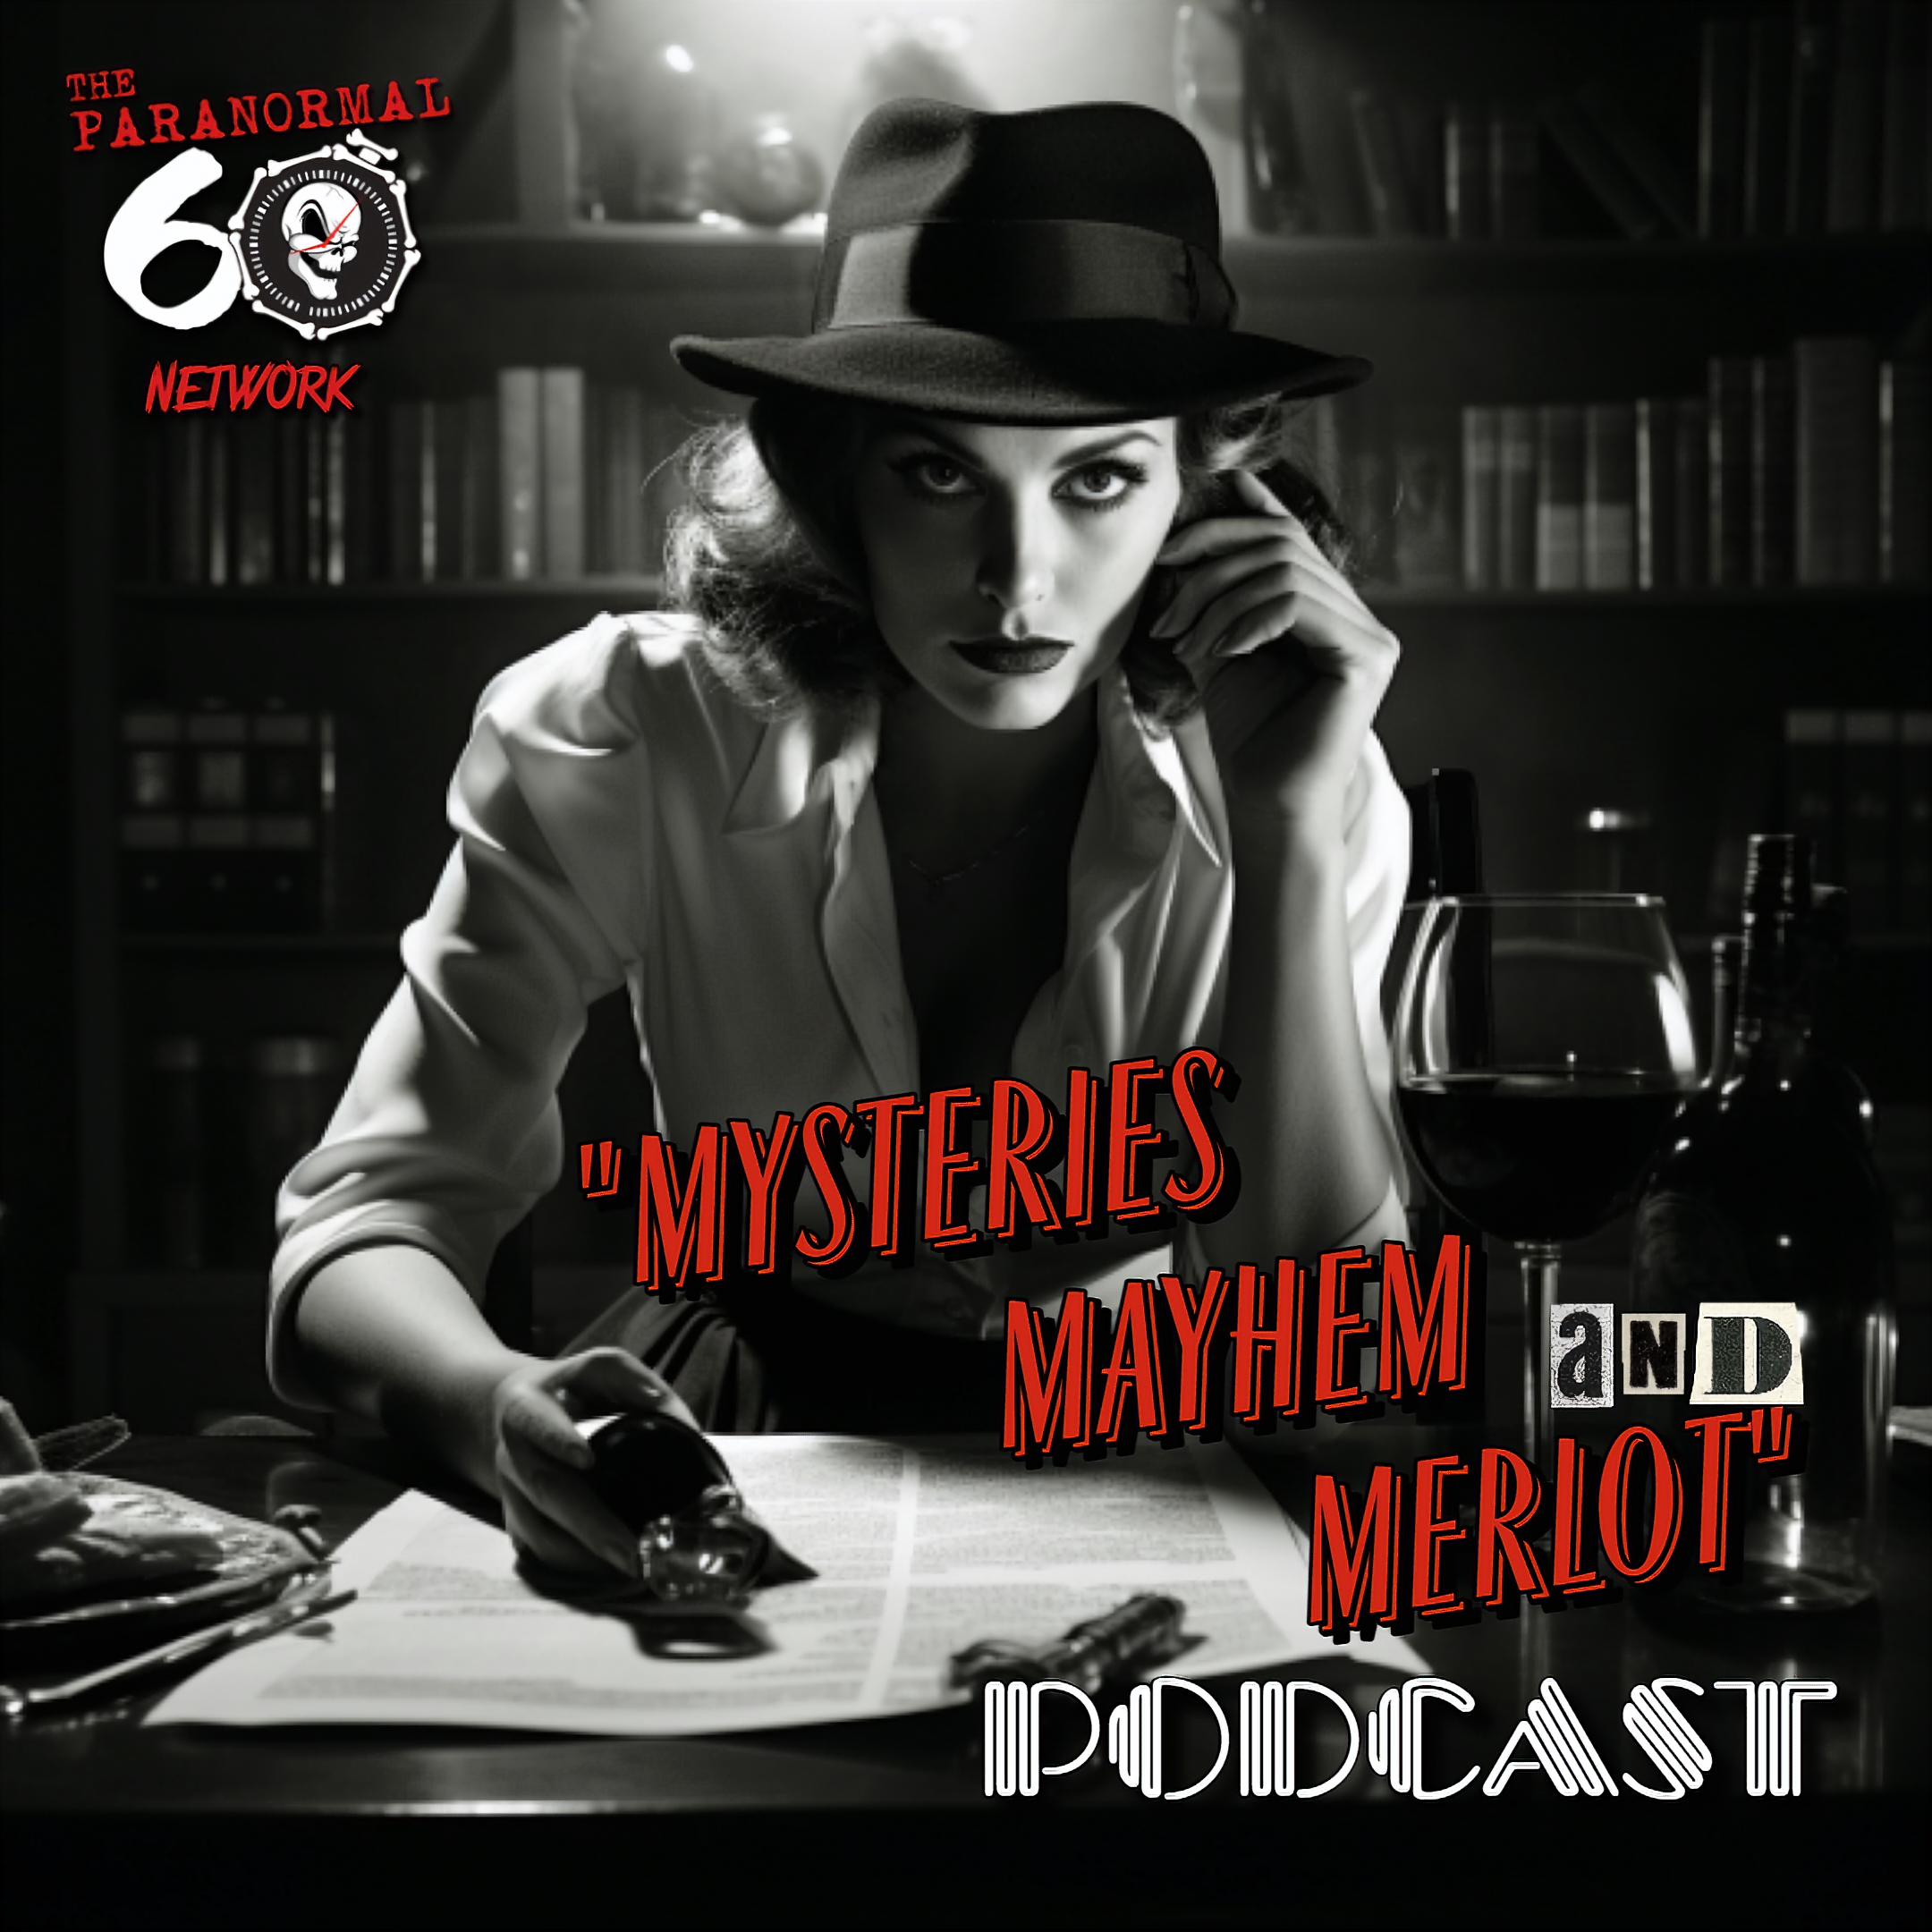 The Paranormal 60 presents - Introduces Mysteries, Mayhem & Merlot